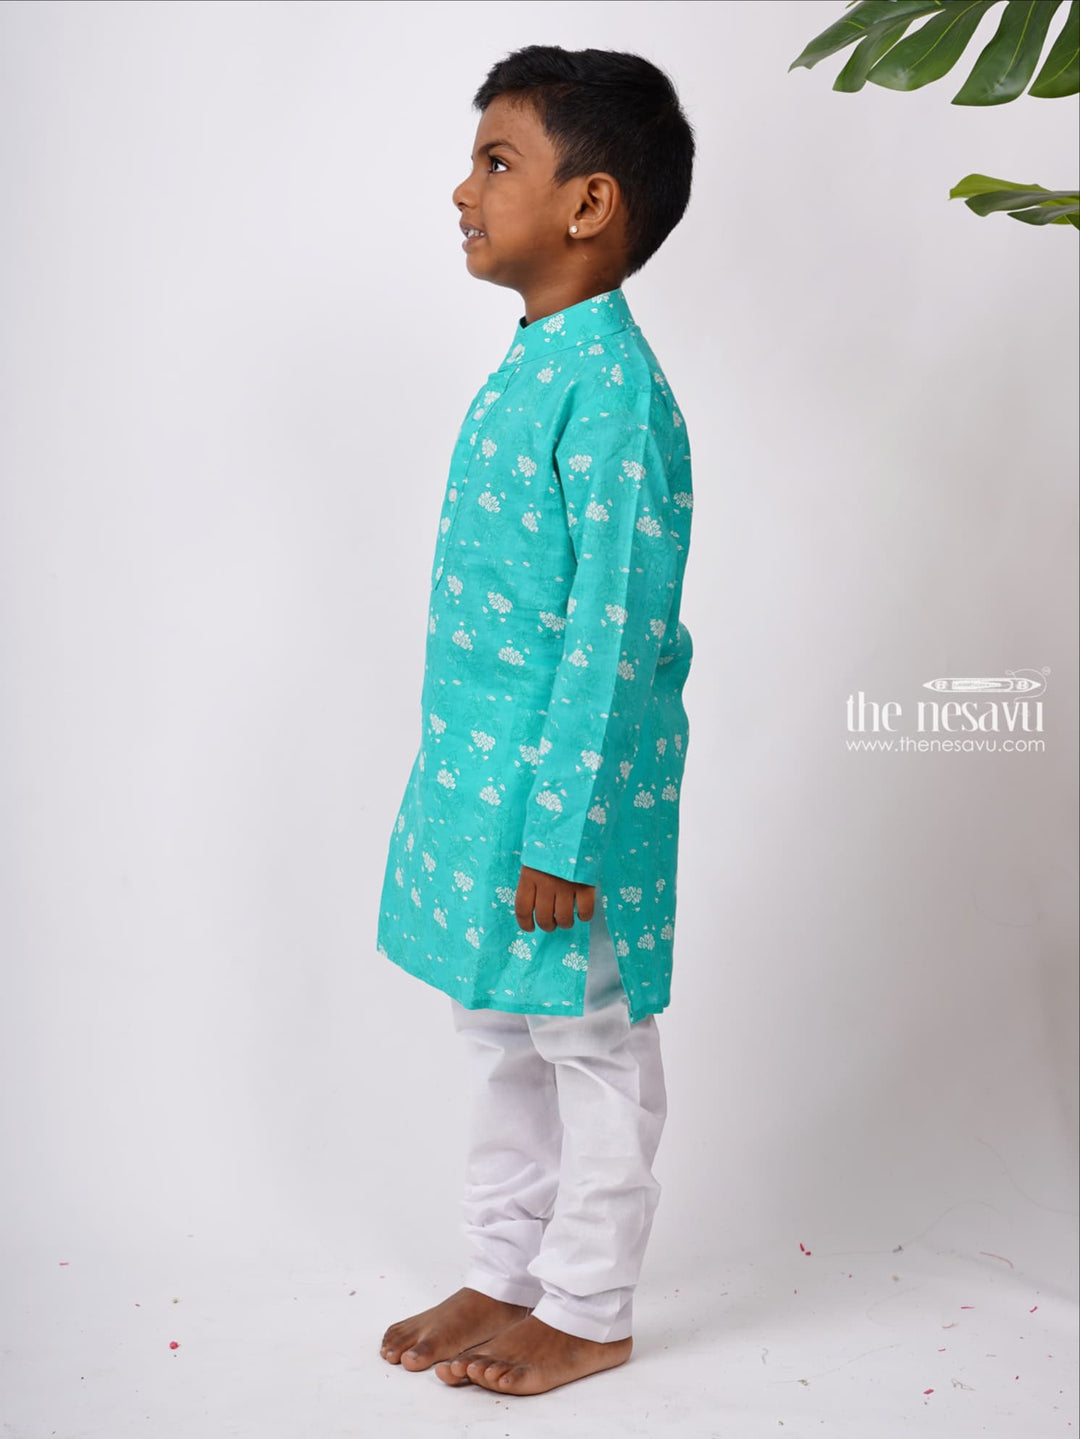 The Nesavu Boys Kurtha Set Aqua Cotton Floral Print Kurta with White Pant for Boys Nesavu Shop Boys Kurta Online | Latest Cotton Printed Kurtas | The Nesavu